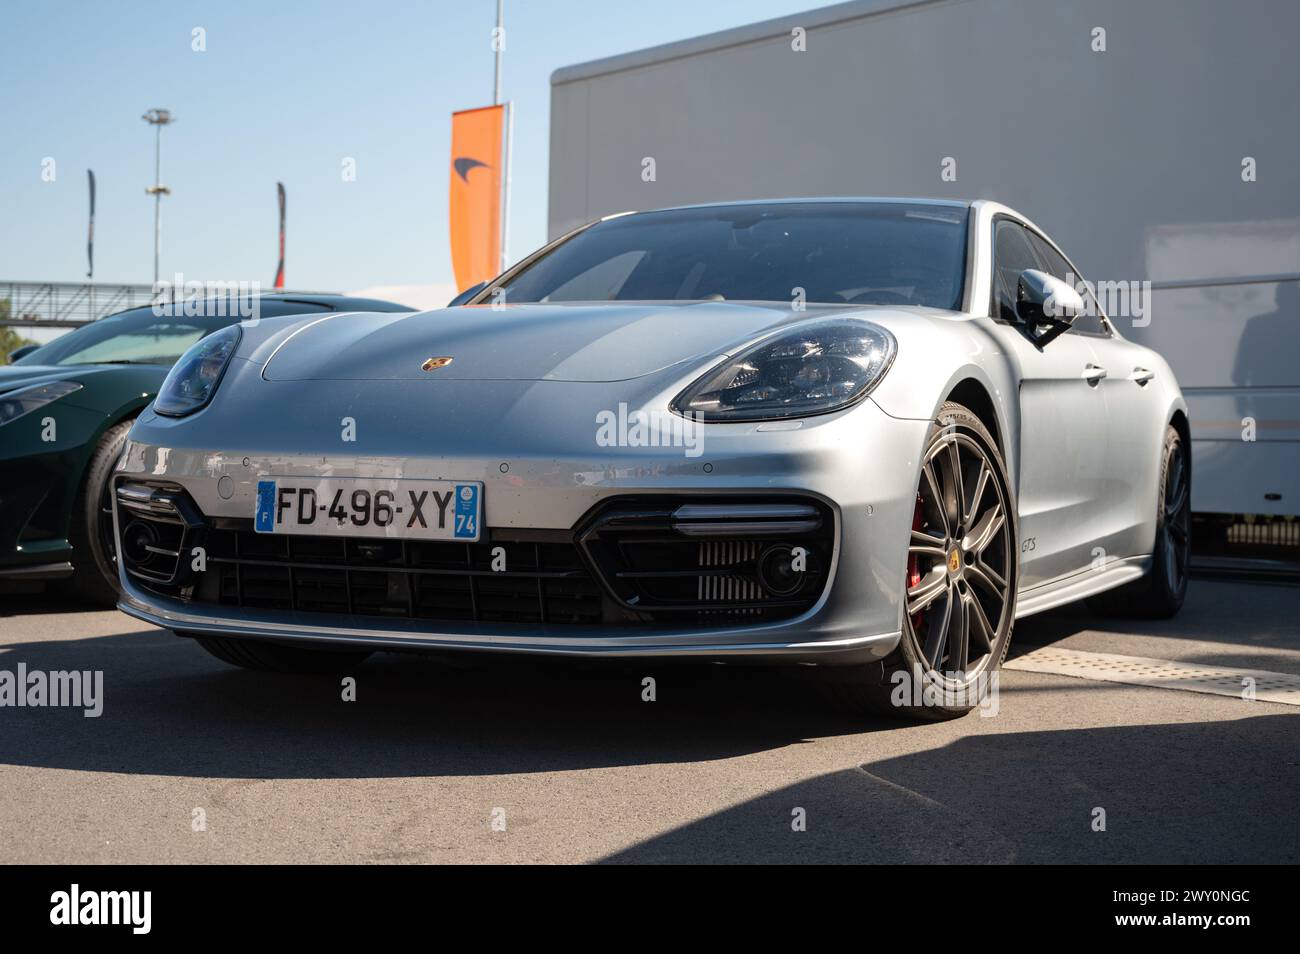 Front view of a German luxury sports sedan, the silver Porsche Panamera GTS Stock Photo